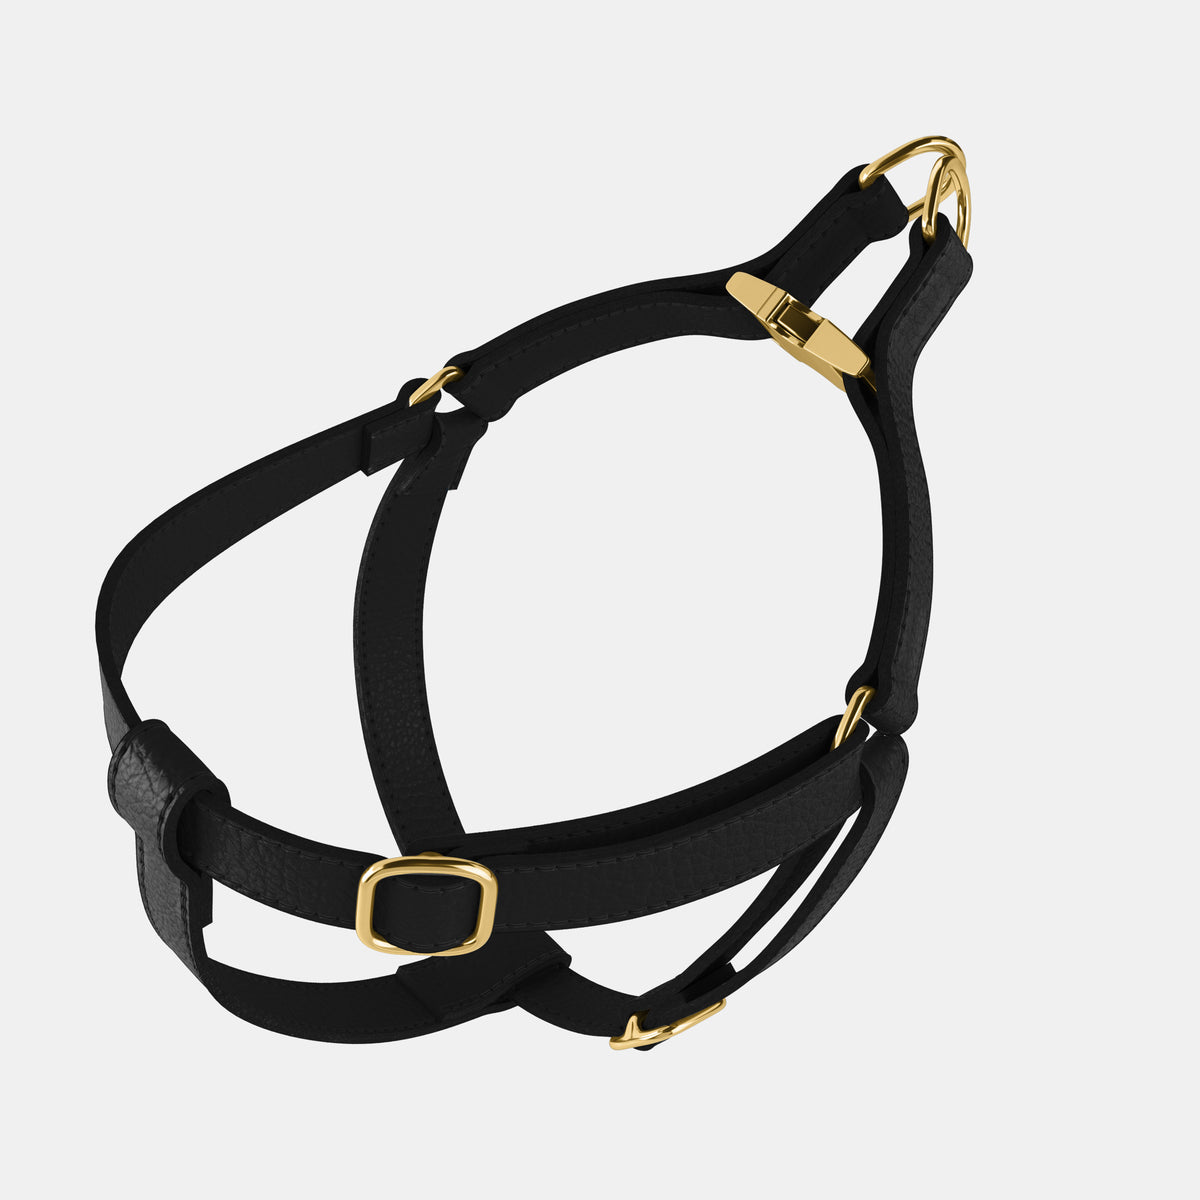 Leather Dog Harness - Black - RYAN London